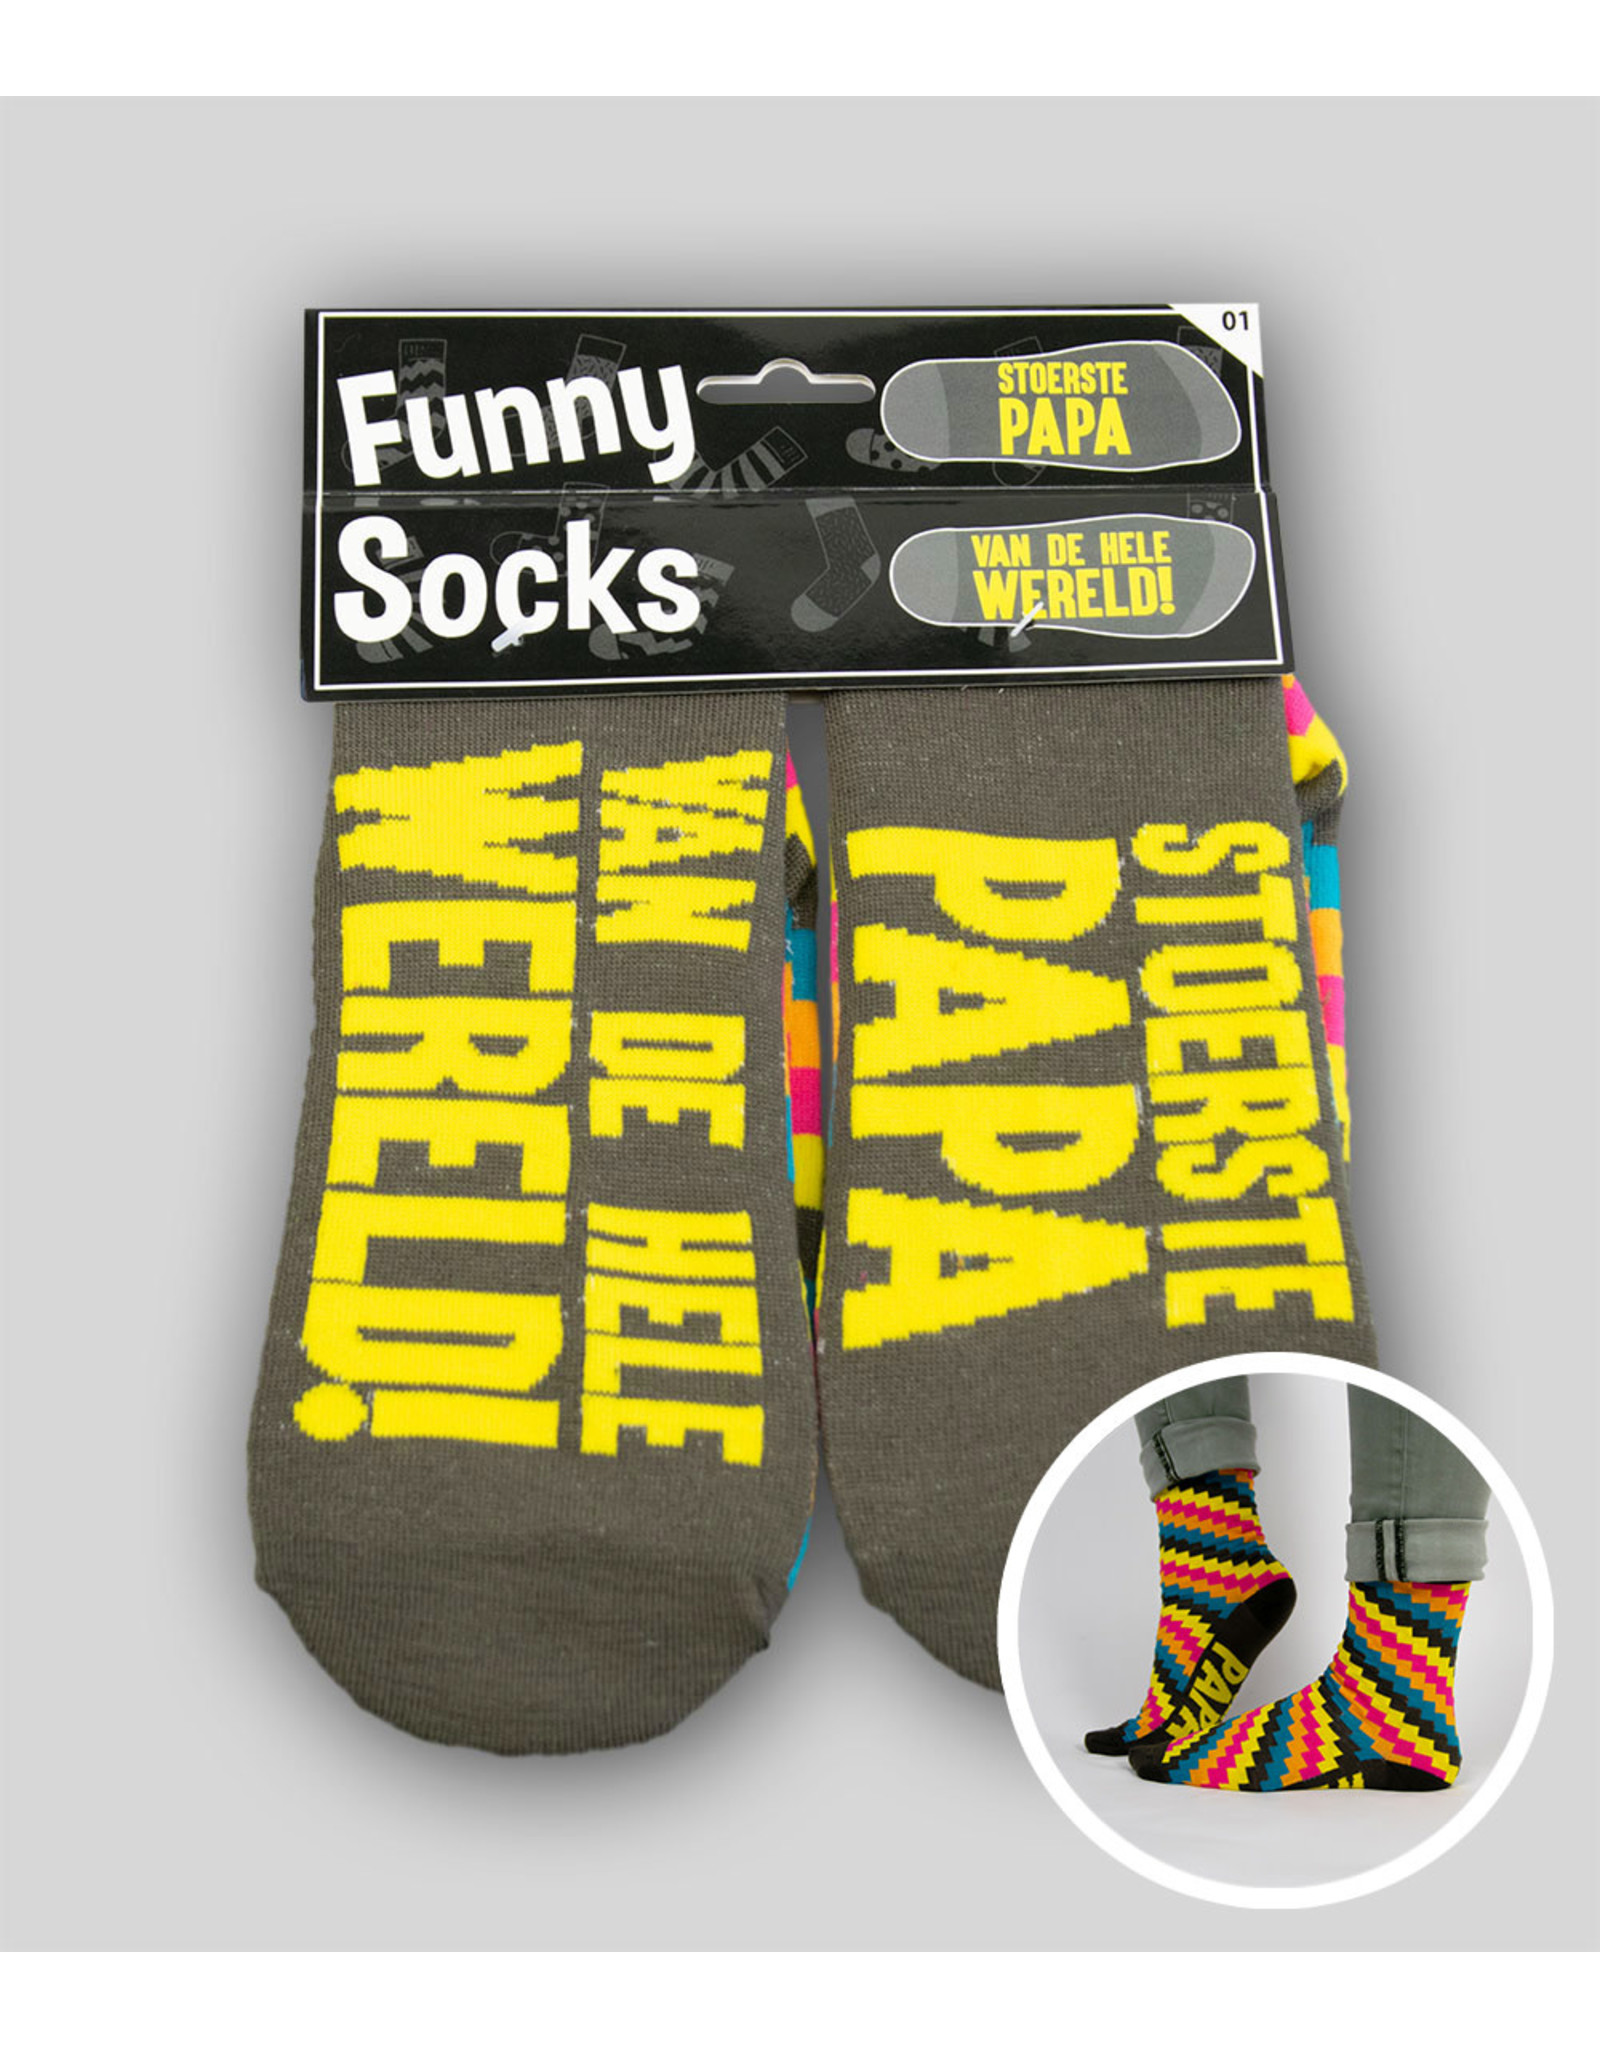 Funny socks Stoerste papa